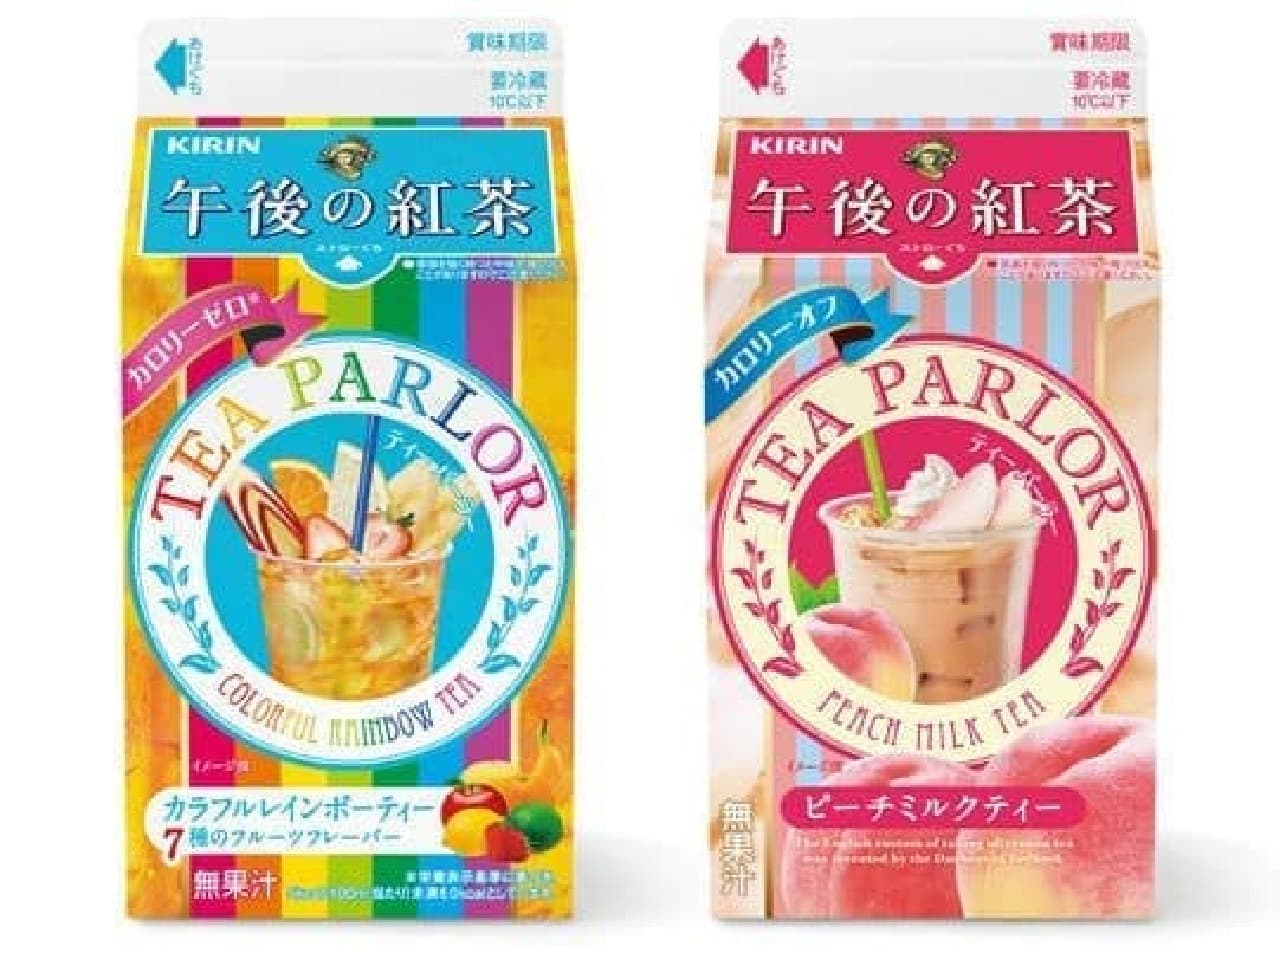 "Kirin afternoon tea tea parlor colorful rainbow tea" (left), "same peach milk tea" (right)